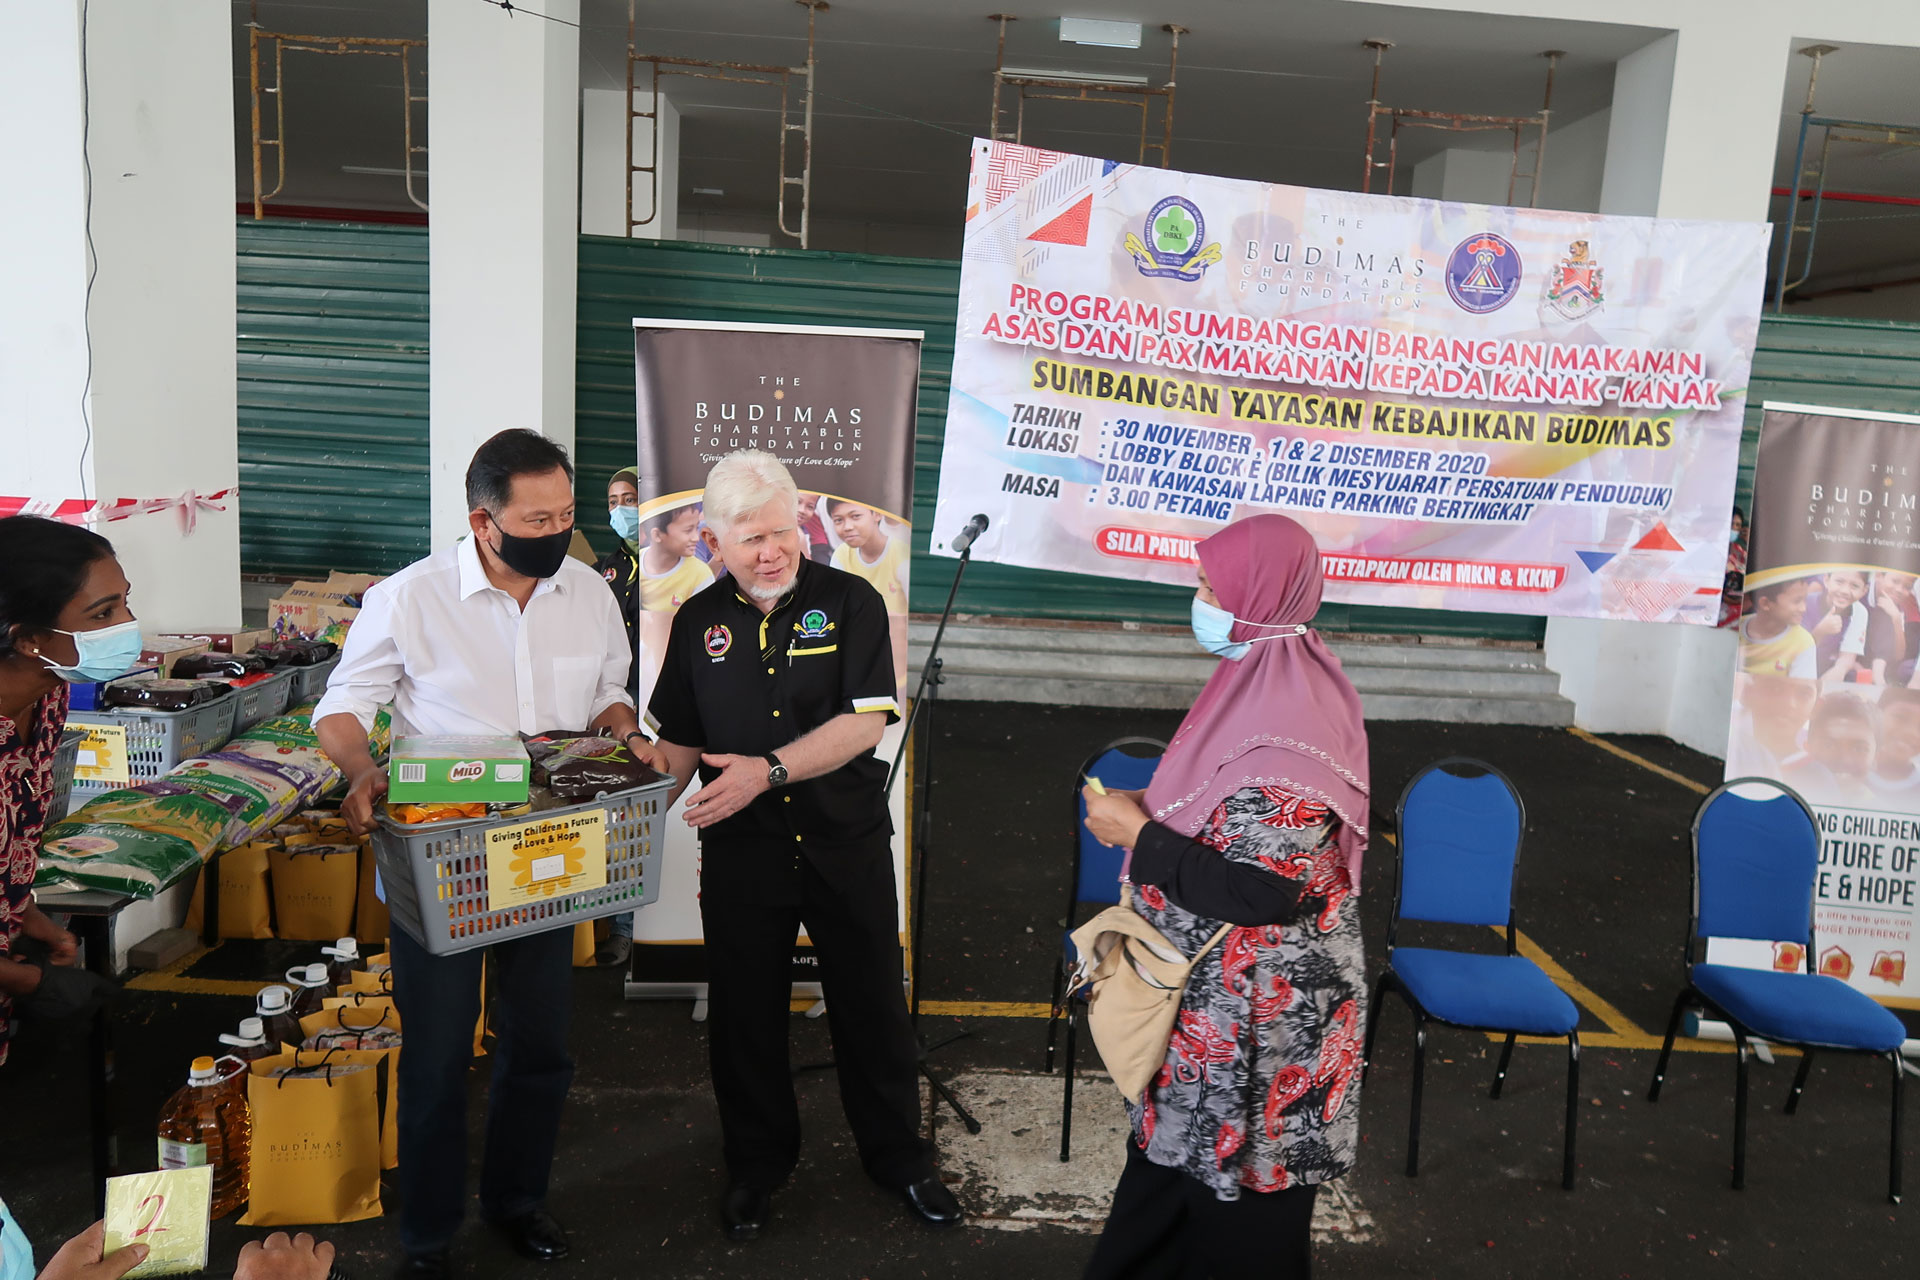 Charity Distribution To The Residents Of Perumahan Desa Awam Rejang, Selangor.